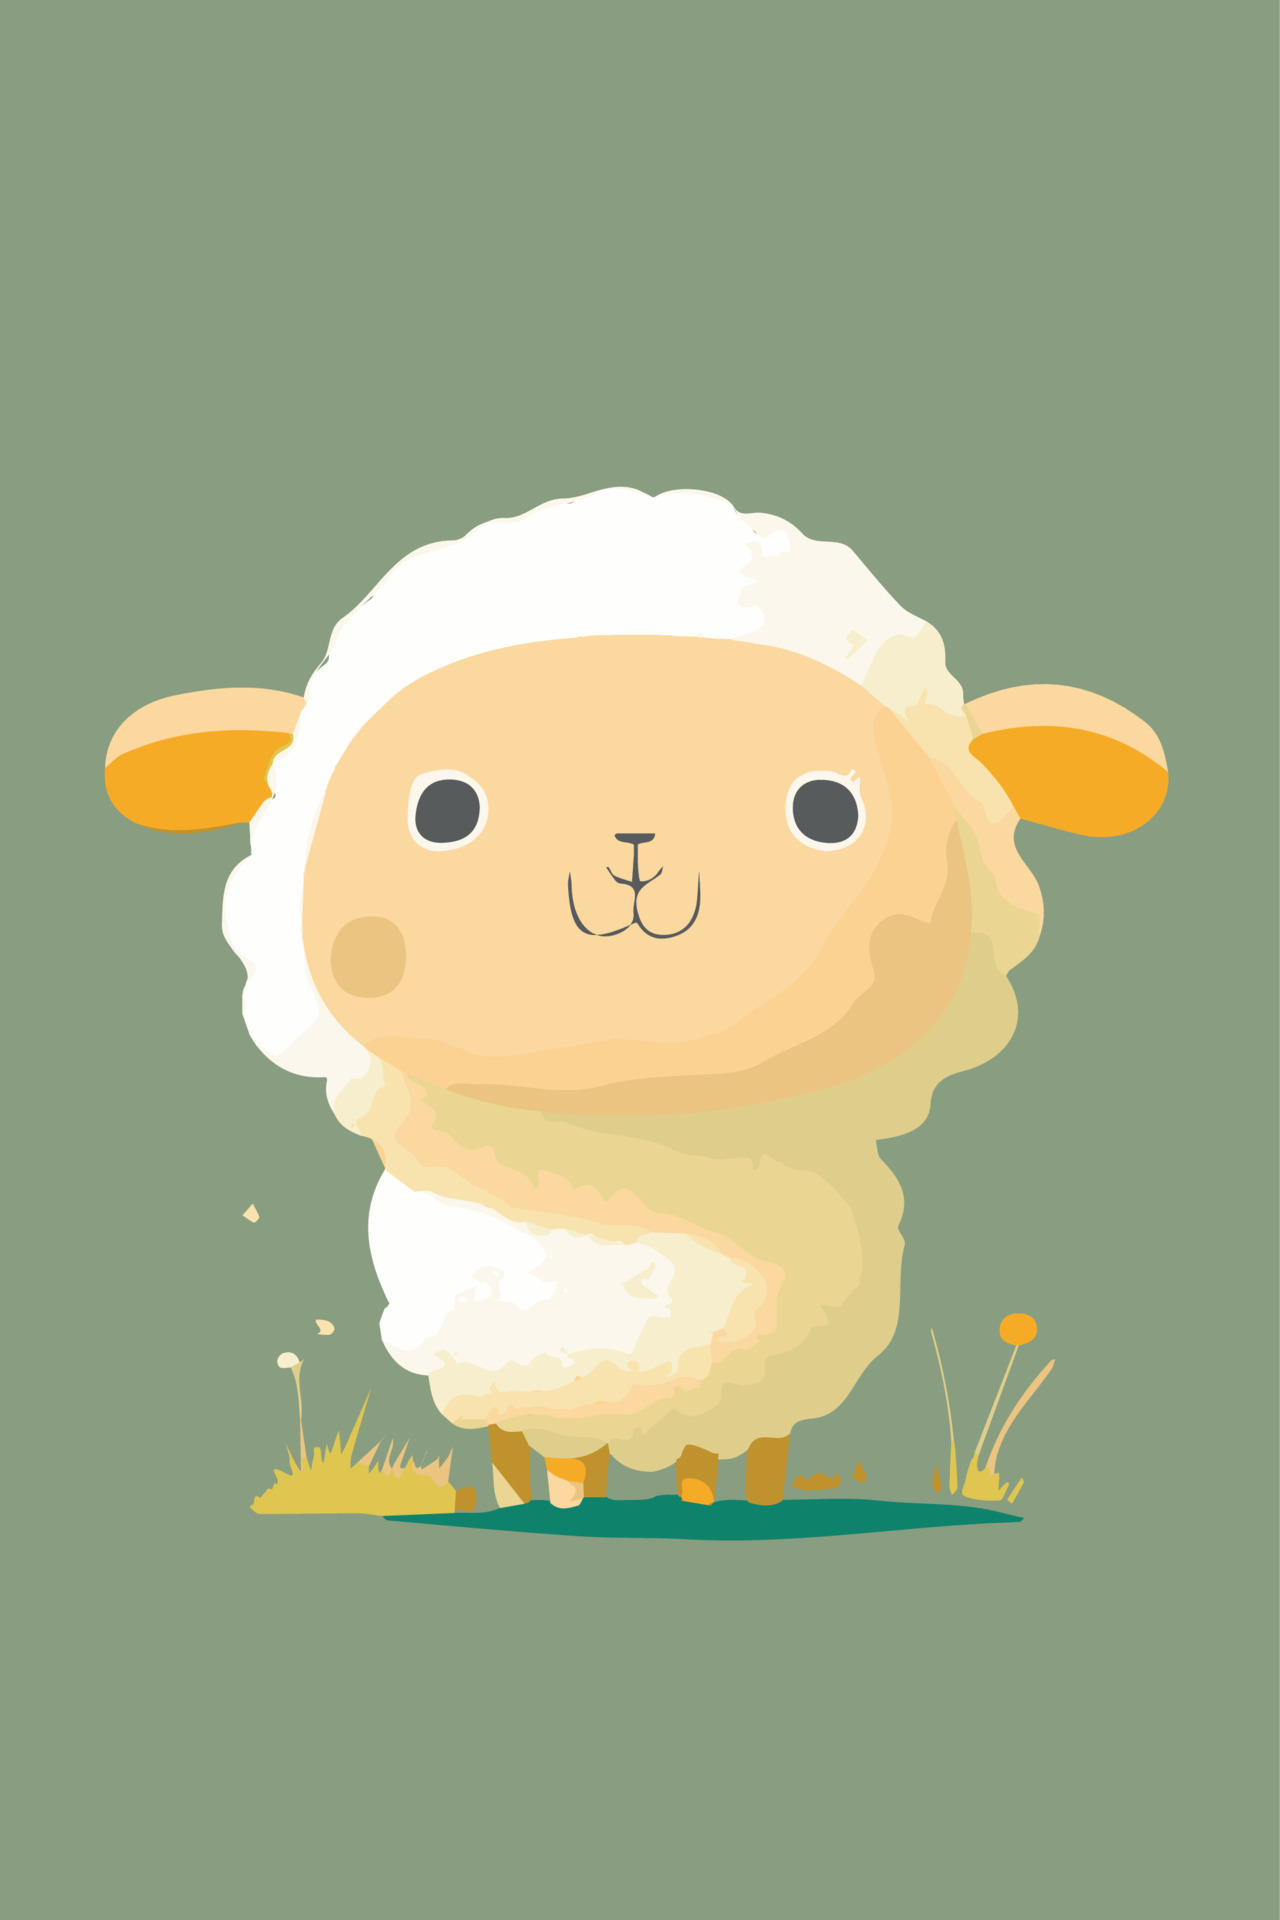 Sheep cartoon drawing. Vector illustration of cute cheerful farm animal.  Isolated adorable baby. 17432055 Vector Art at Vecteezy